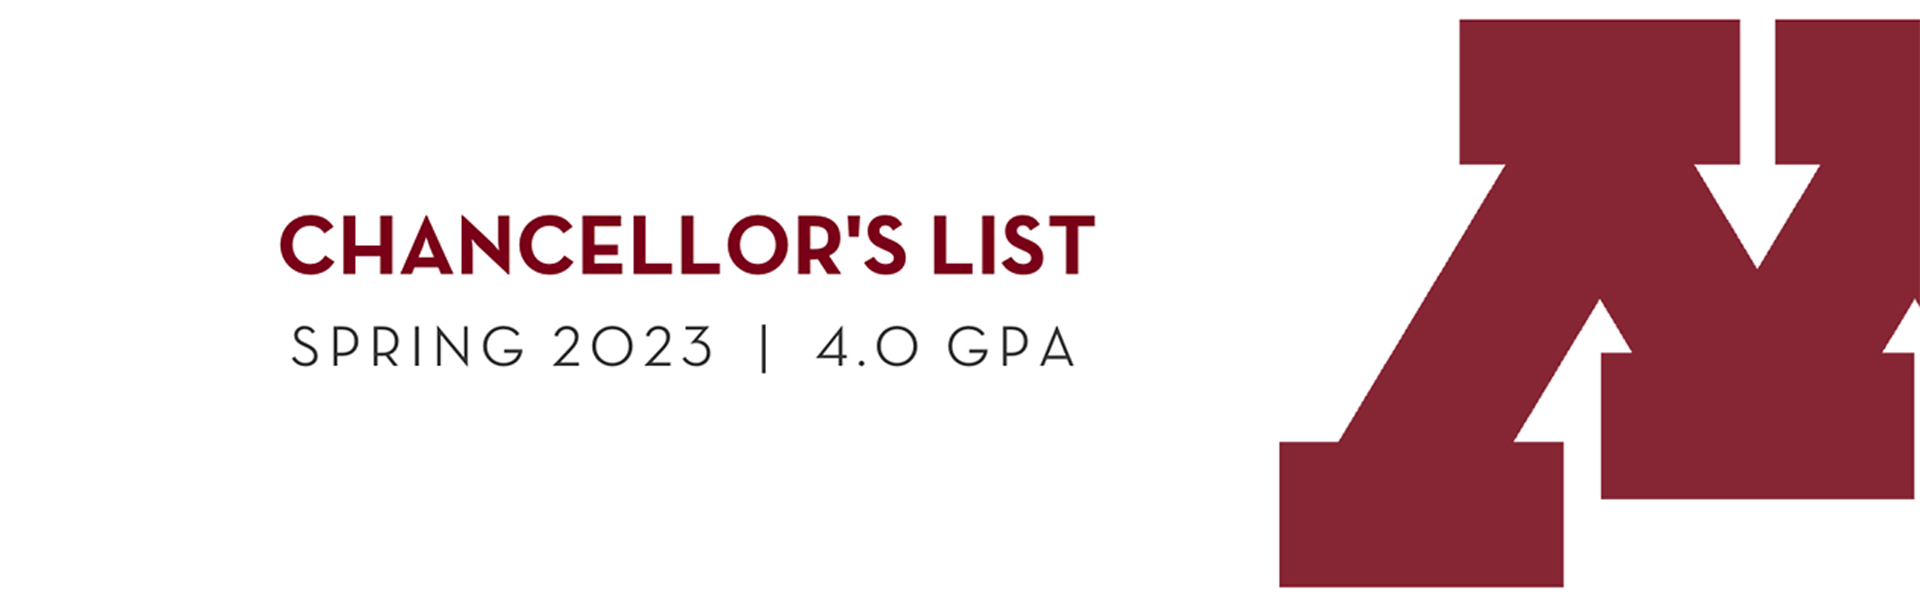 Chancellor's List Spring 2023 - 4.0 GPA